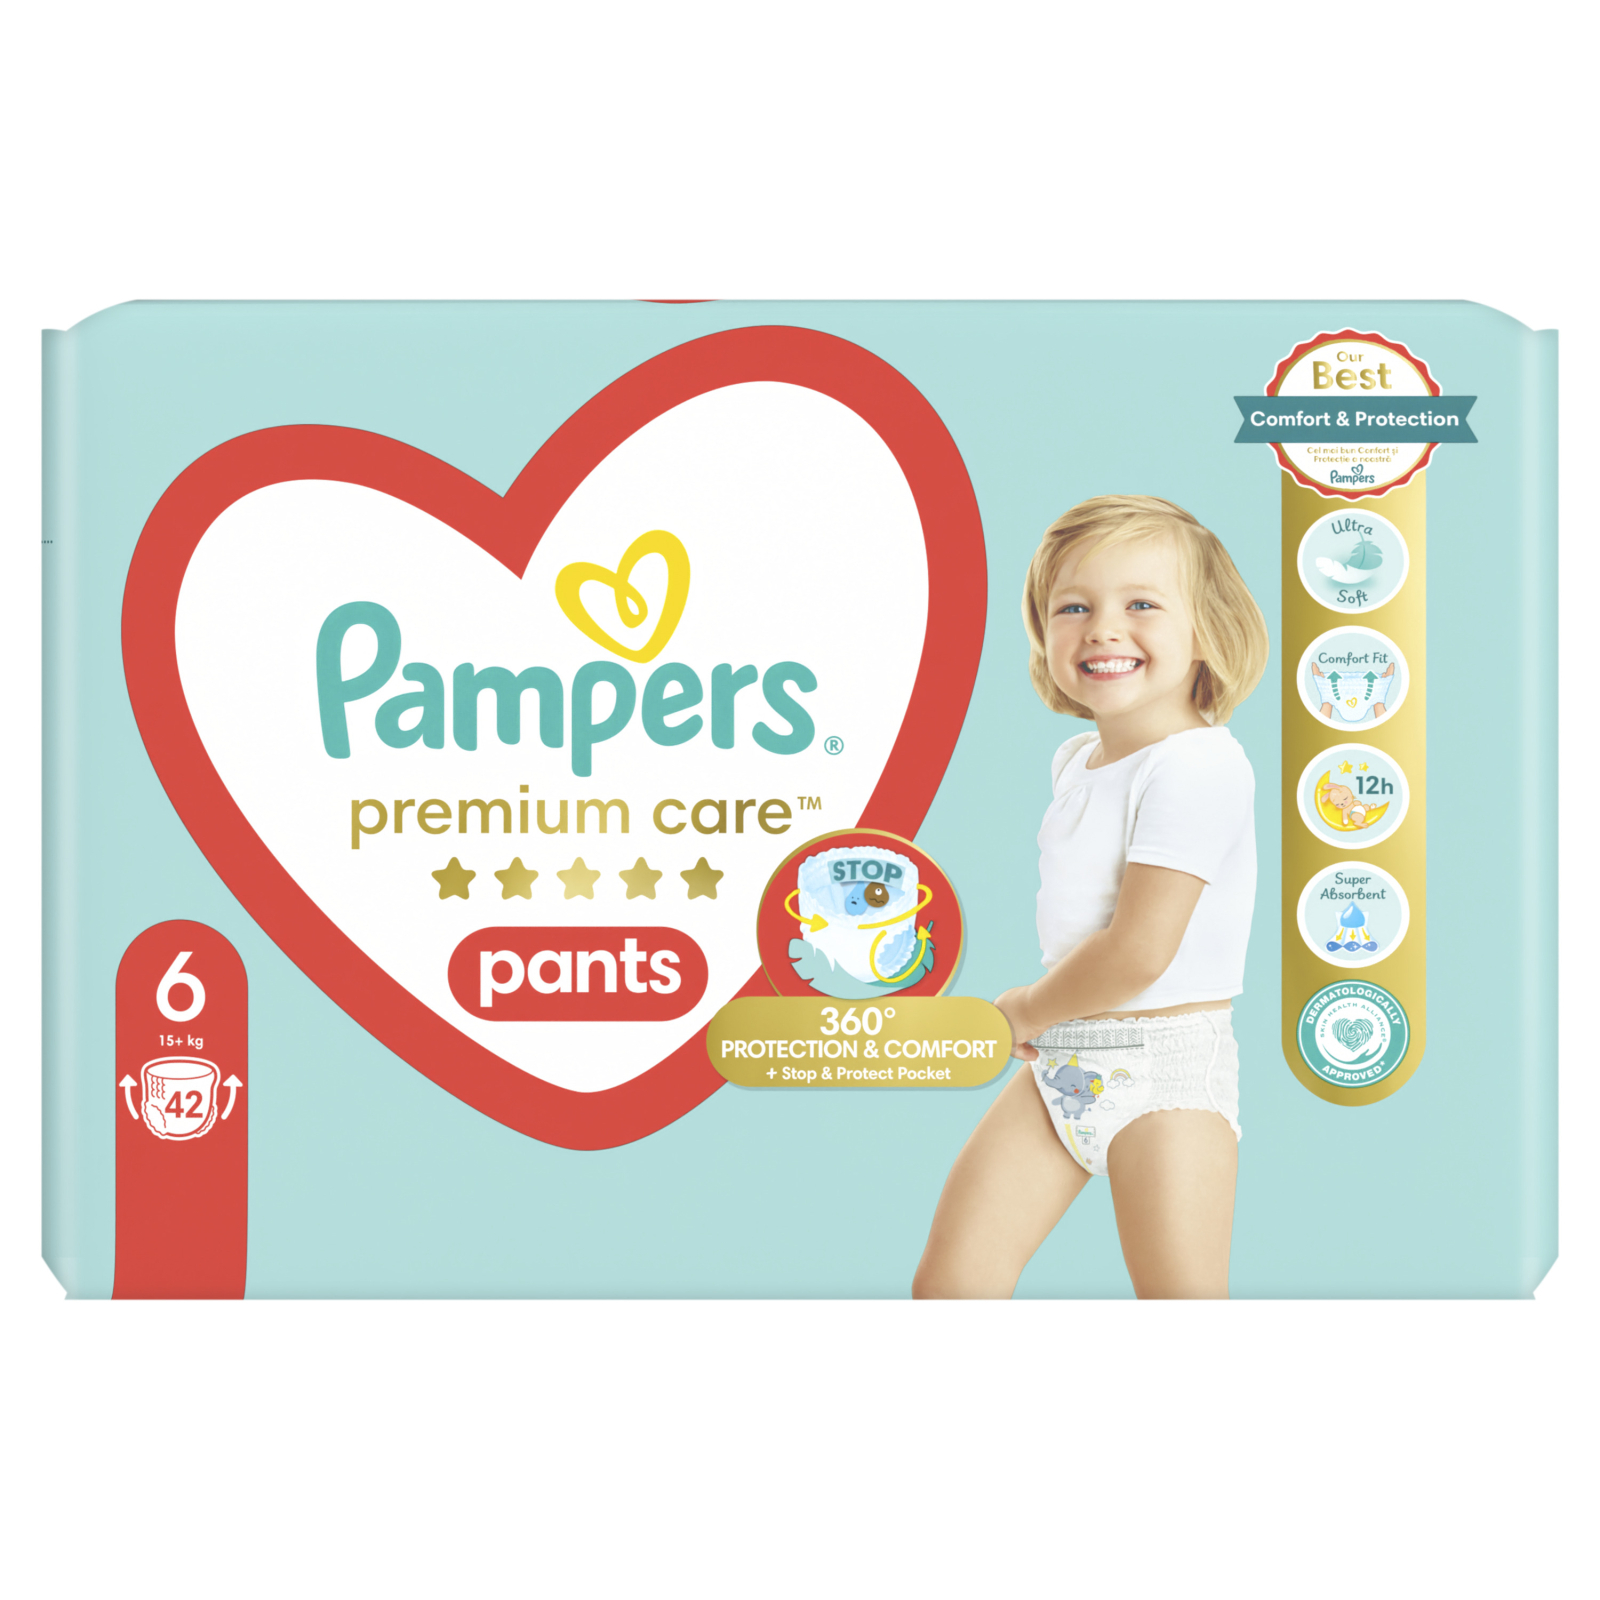 Підгузки Pampers Premium Care Pants Extra Large (15+ кг), 31 шт. (8001090759917) зображення 2